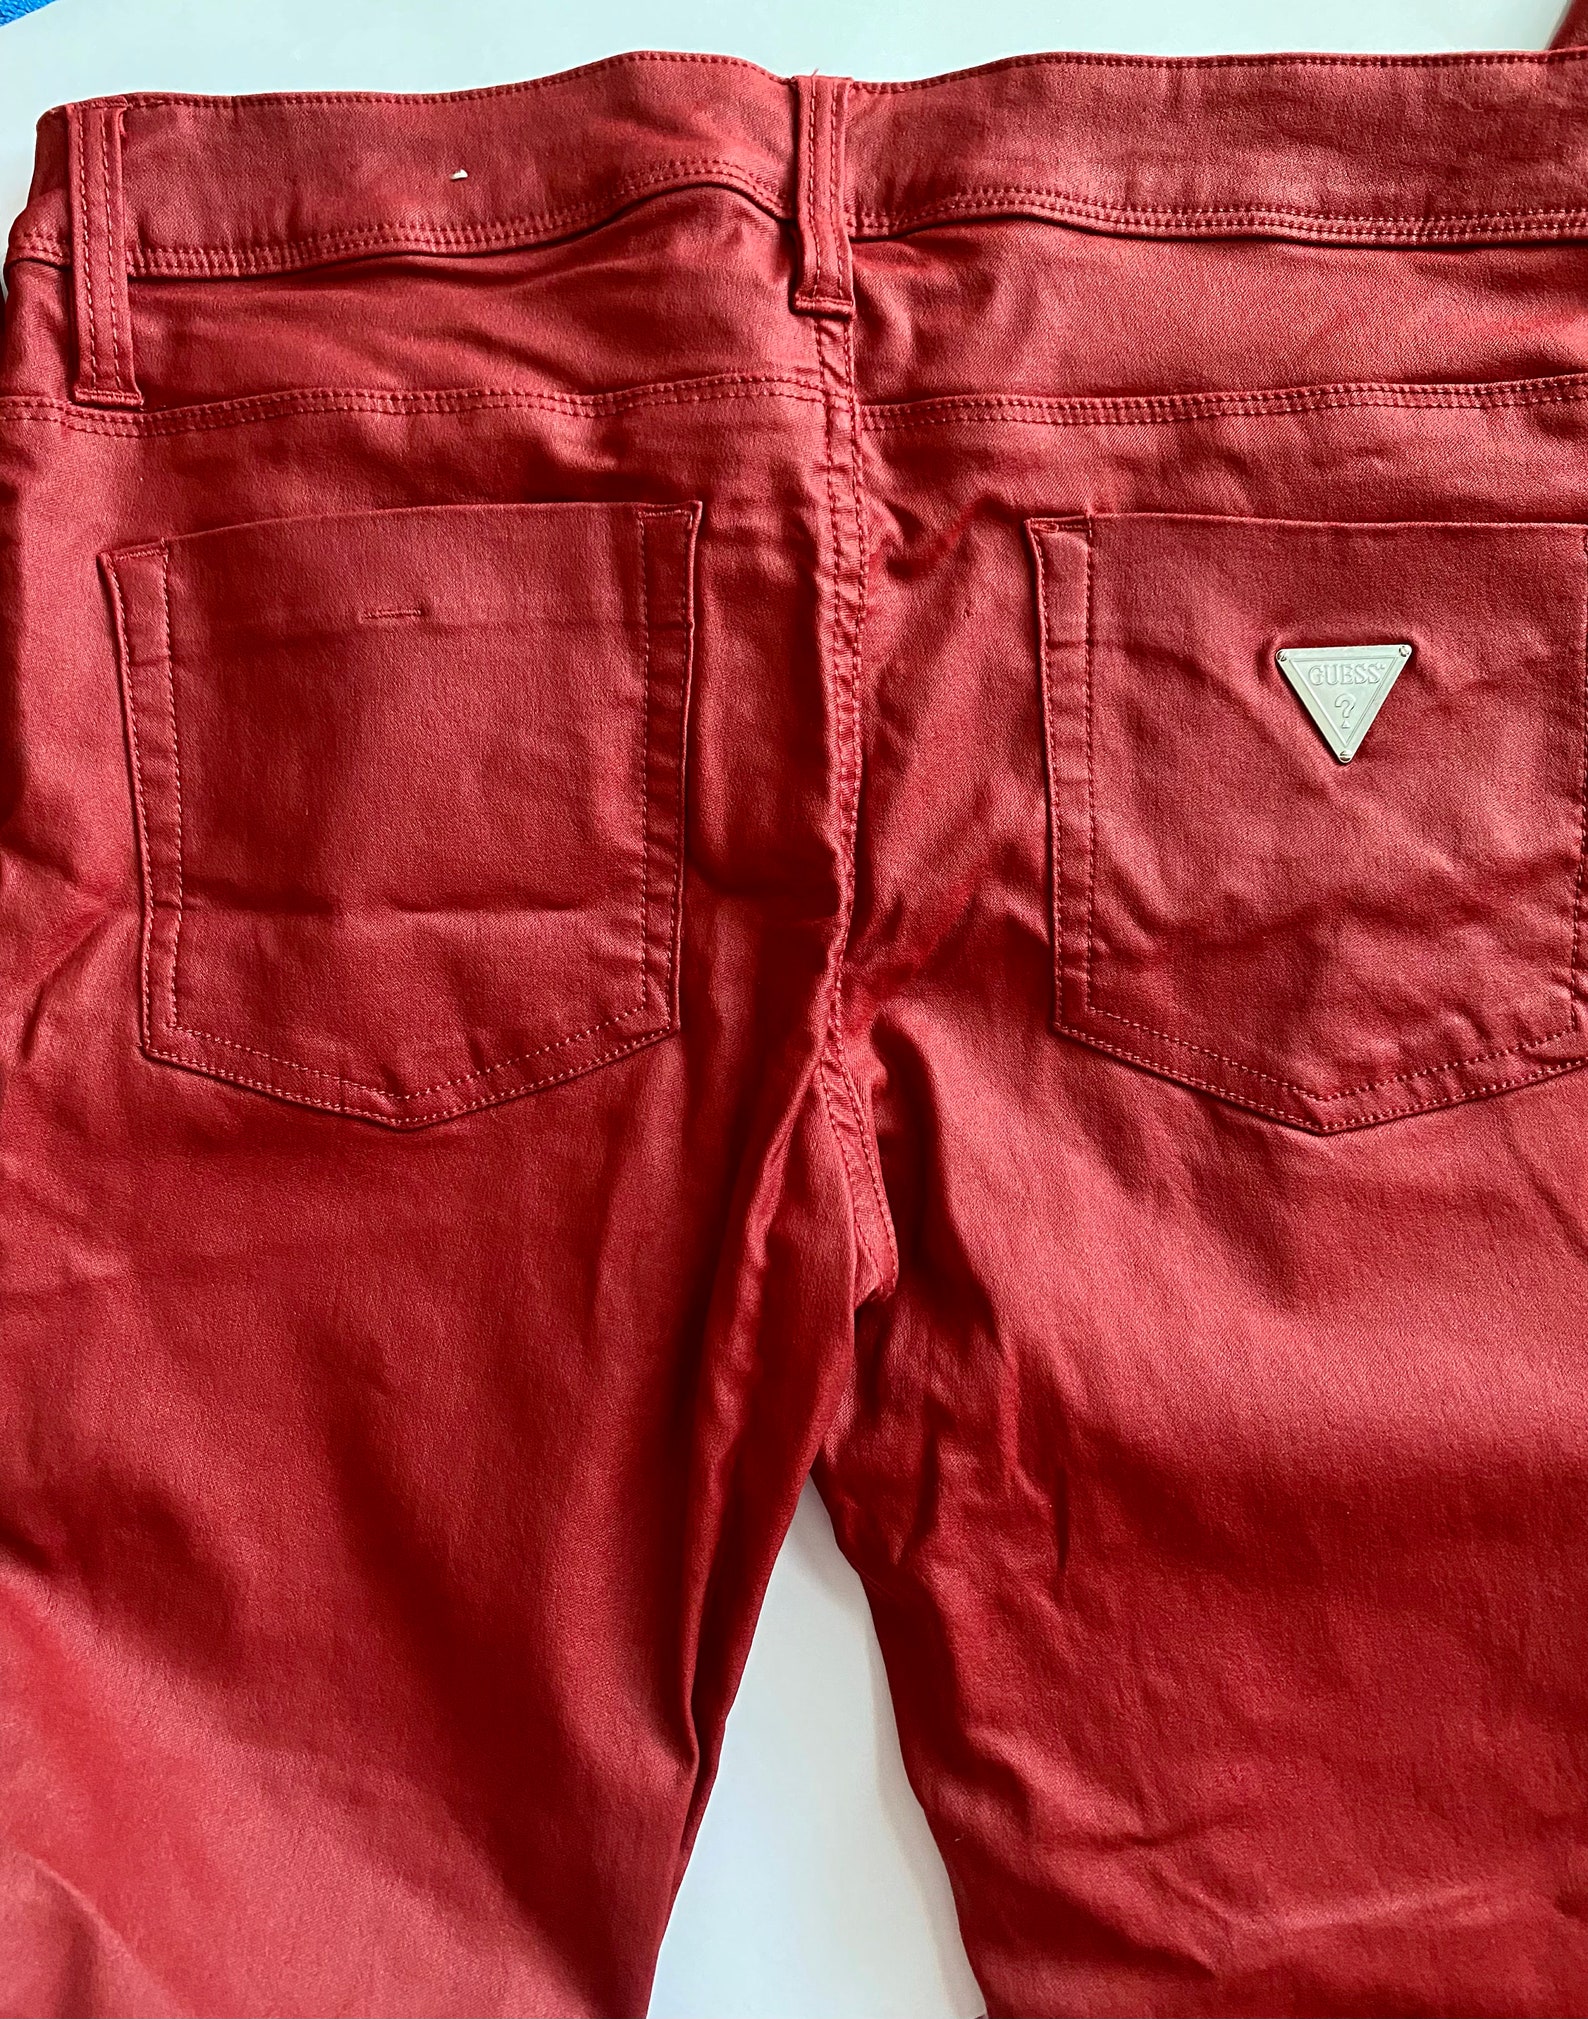 Vintage Guess pants size 29 | Etsy